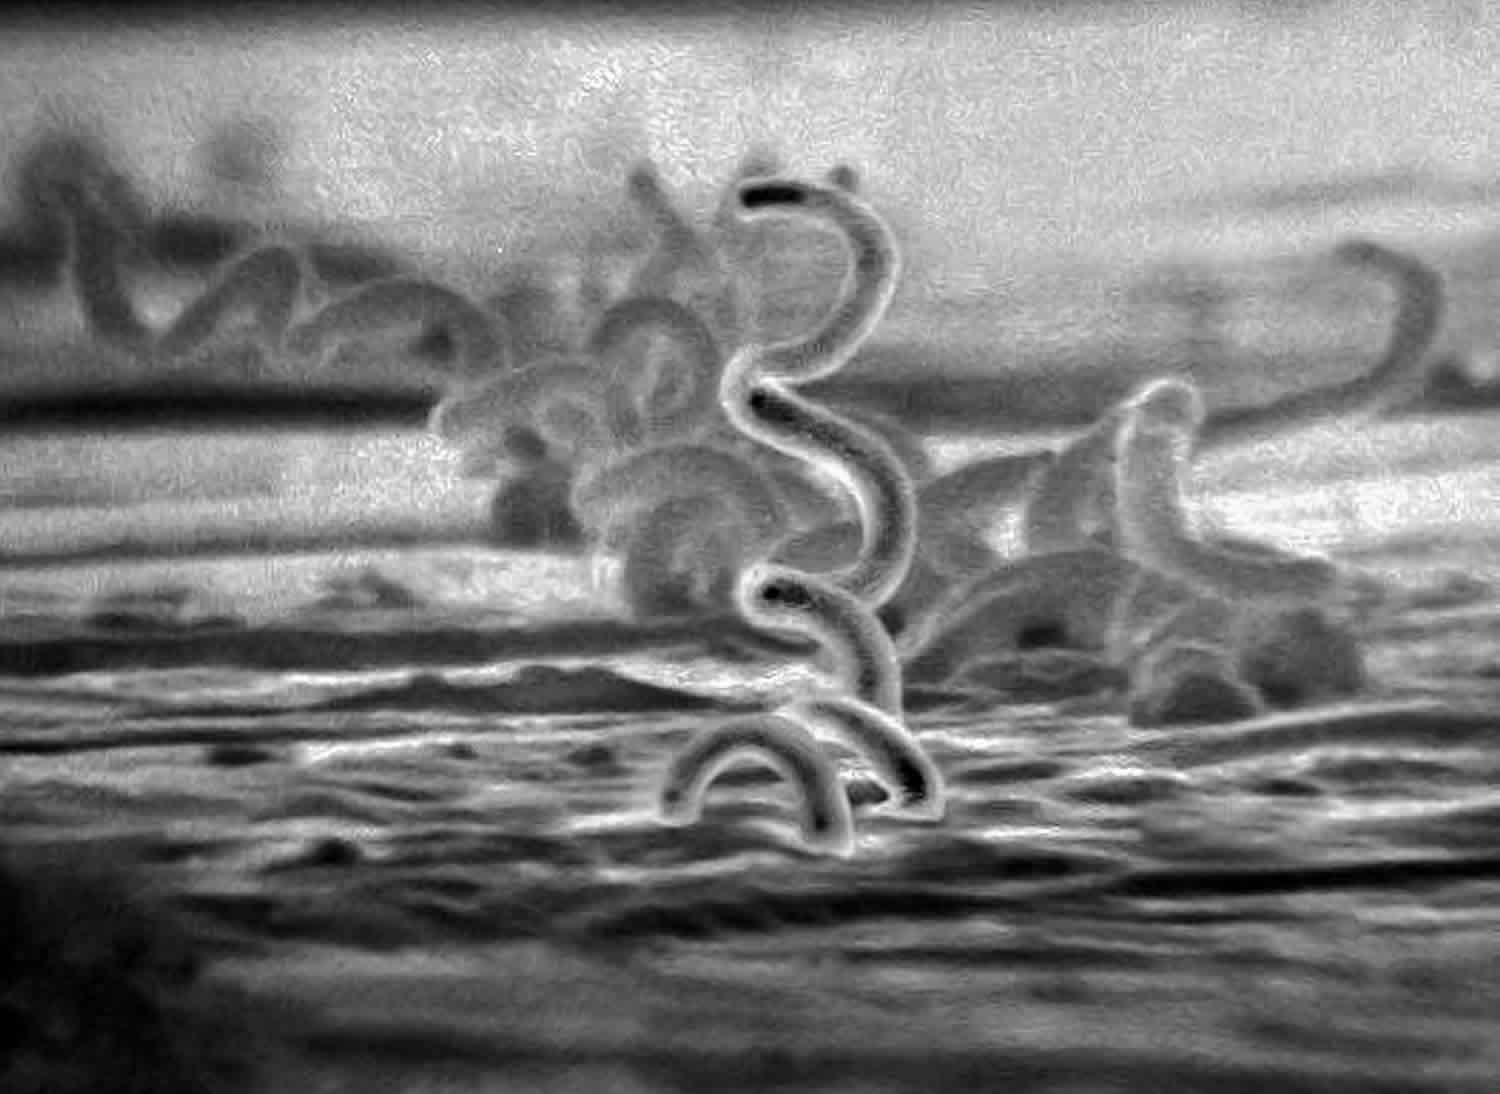 Treponema pallidum bacteria